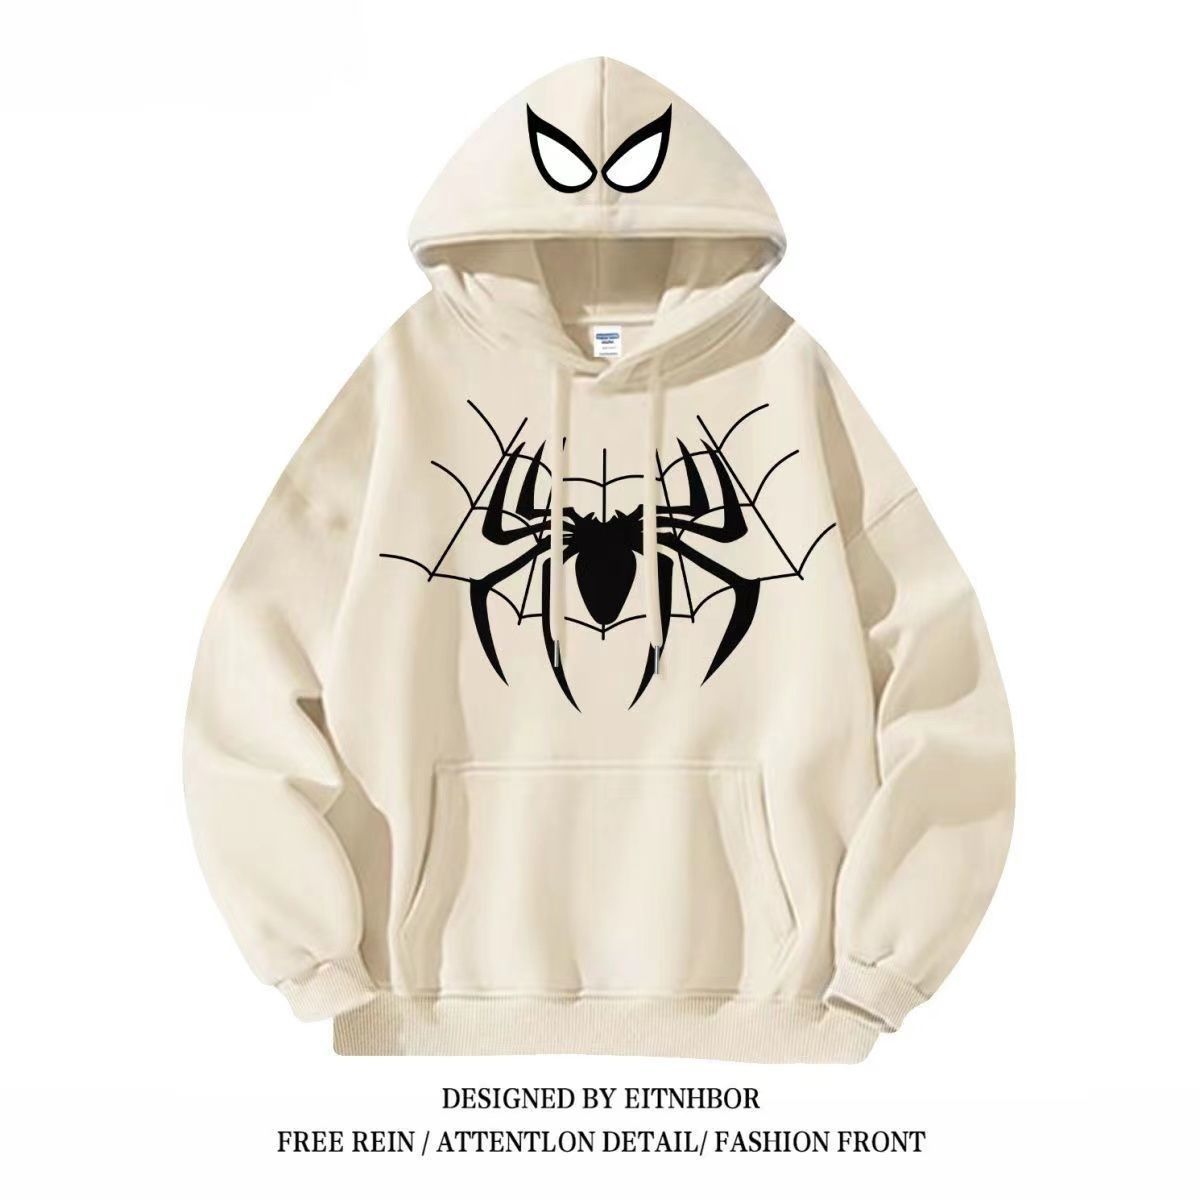 Spider-man clothes